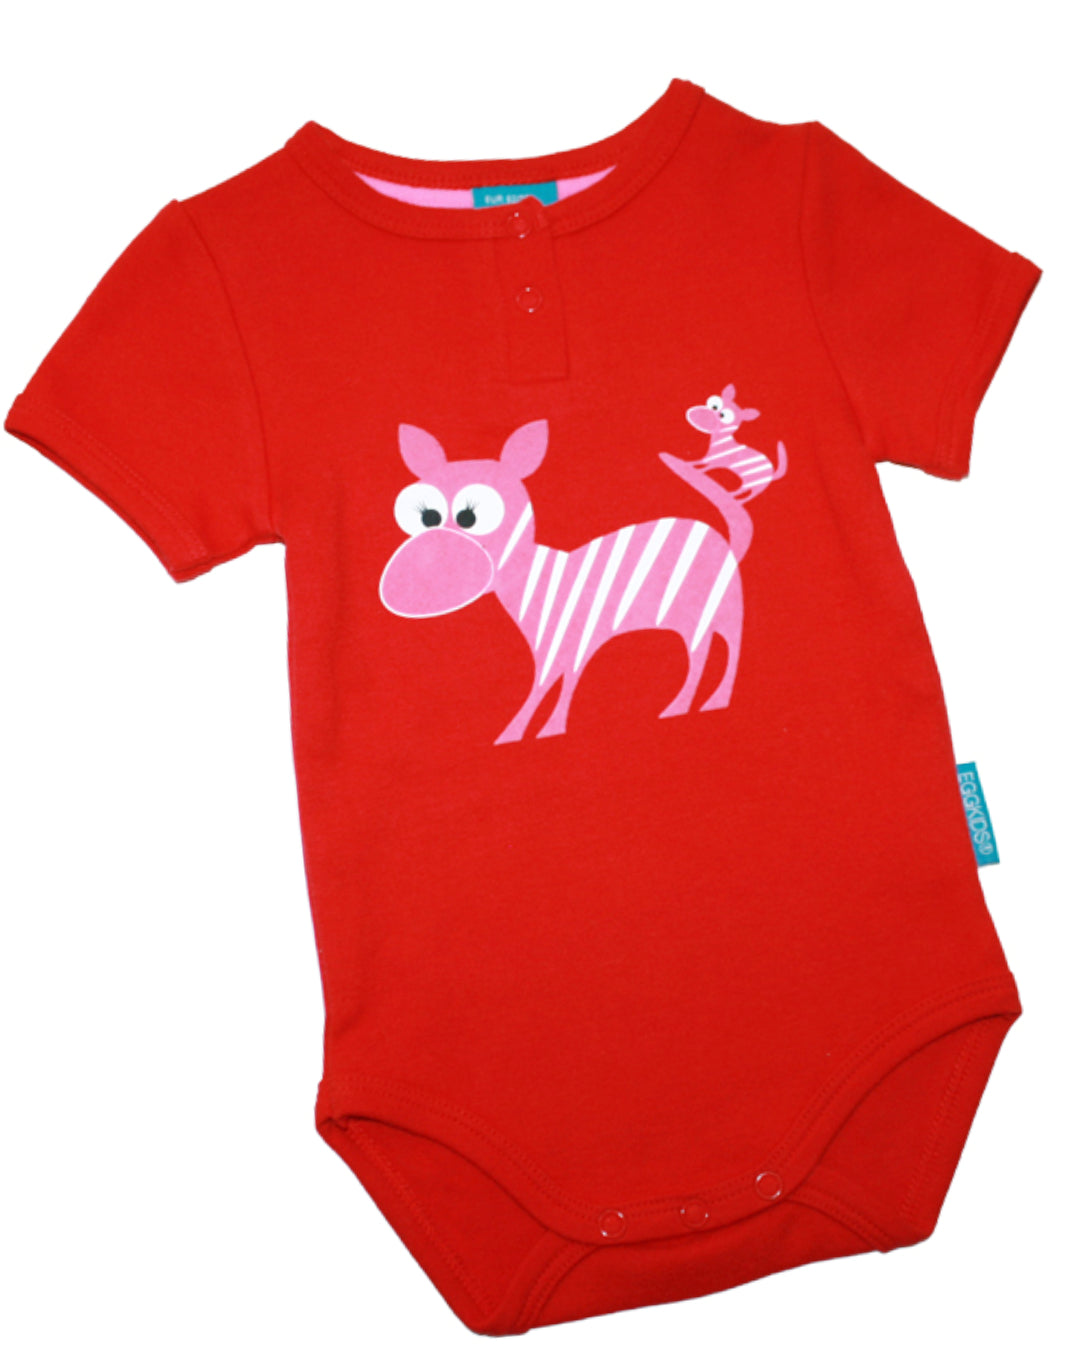 Roter babybody mit Zebra in Pink